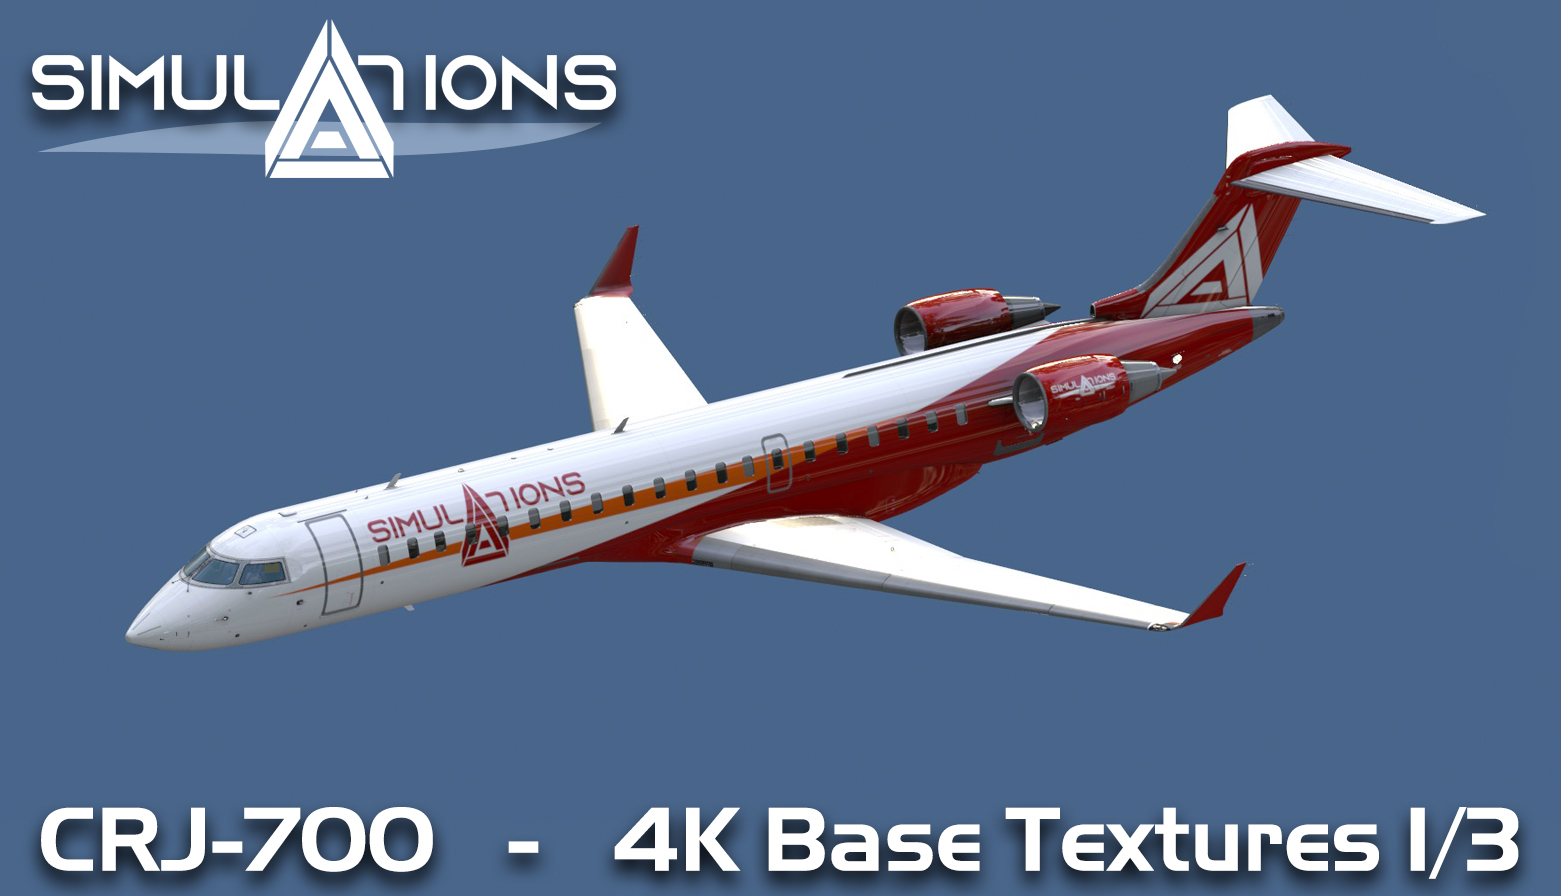 4K Base Textures for CRJ-700 1/3